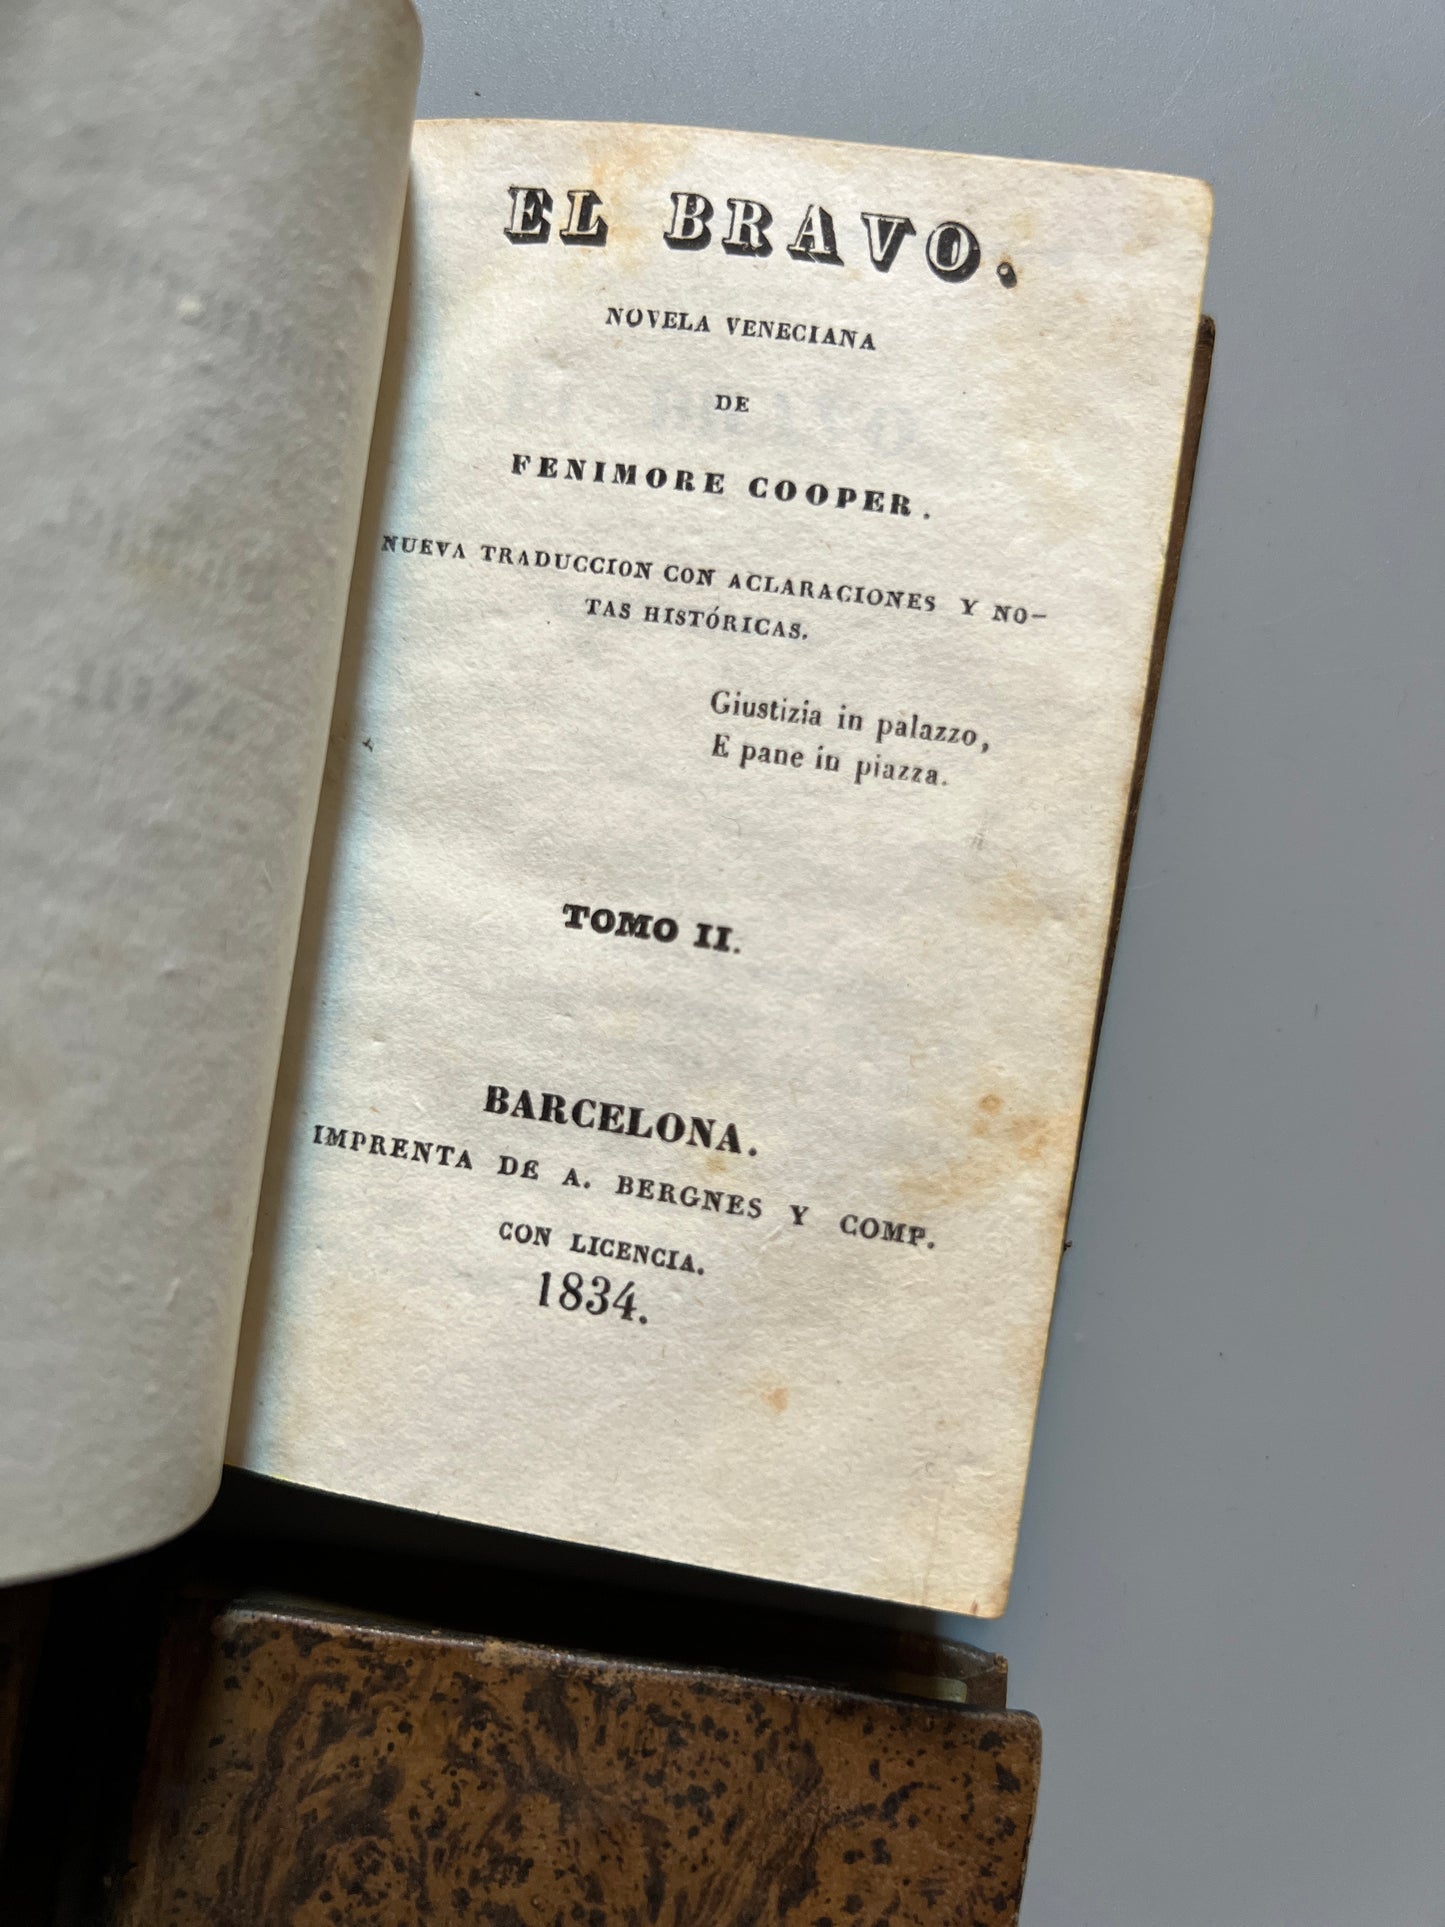 El bravo, Fenimore Cooper - Biblioteca de Damas, 1834